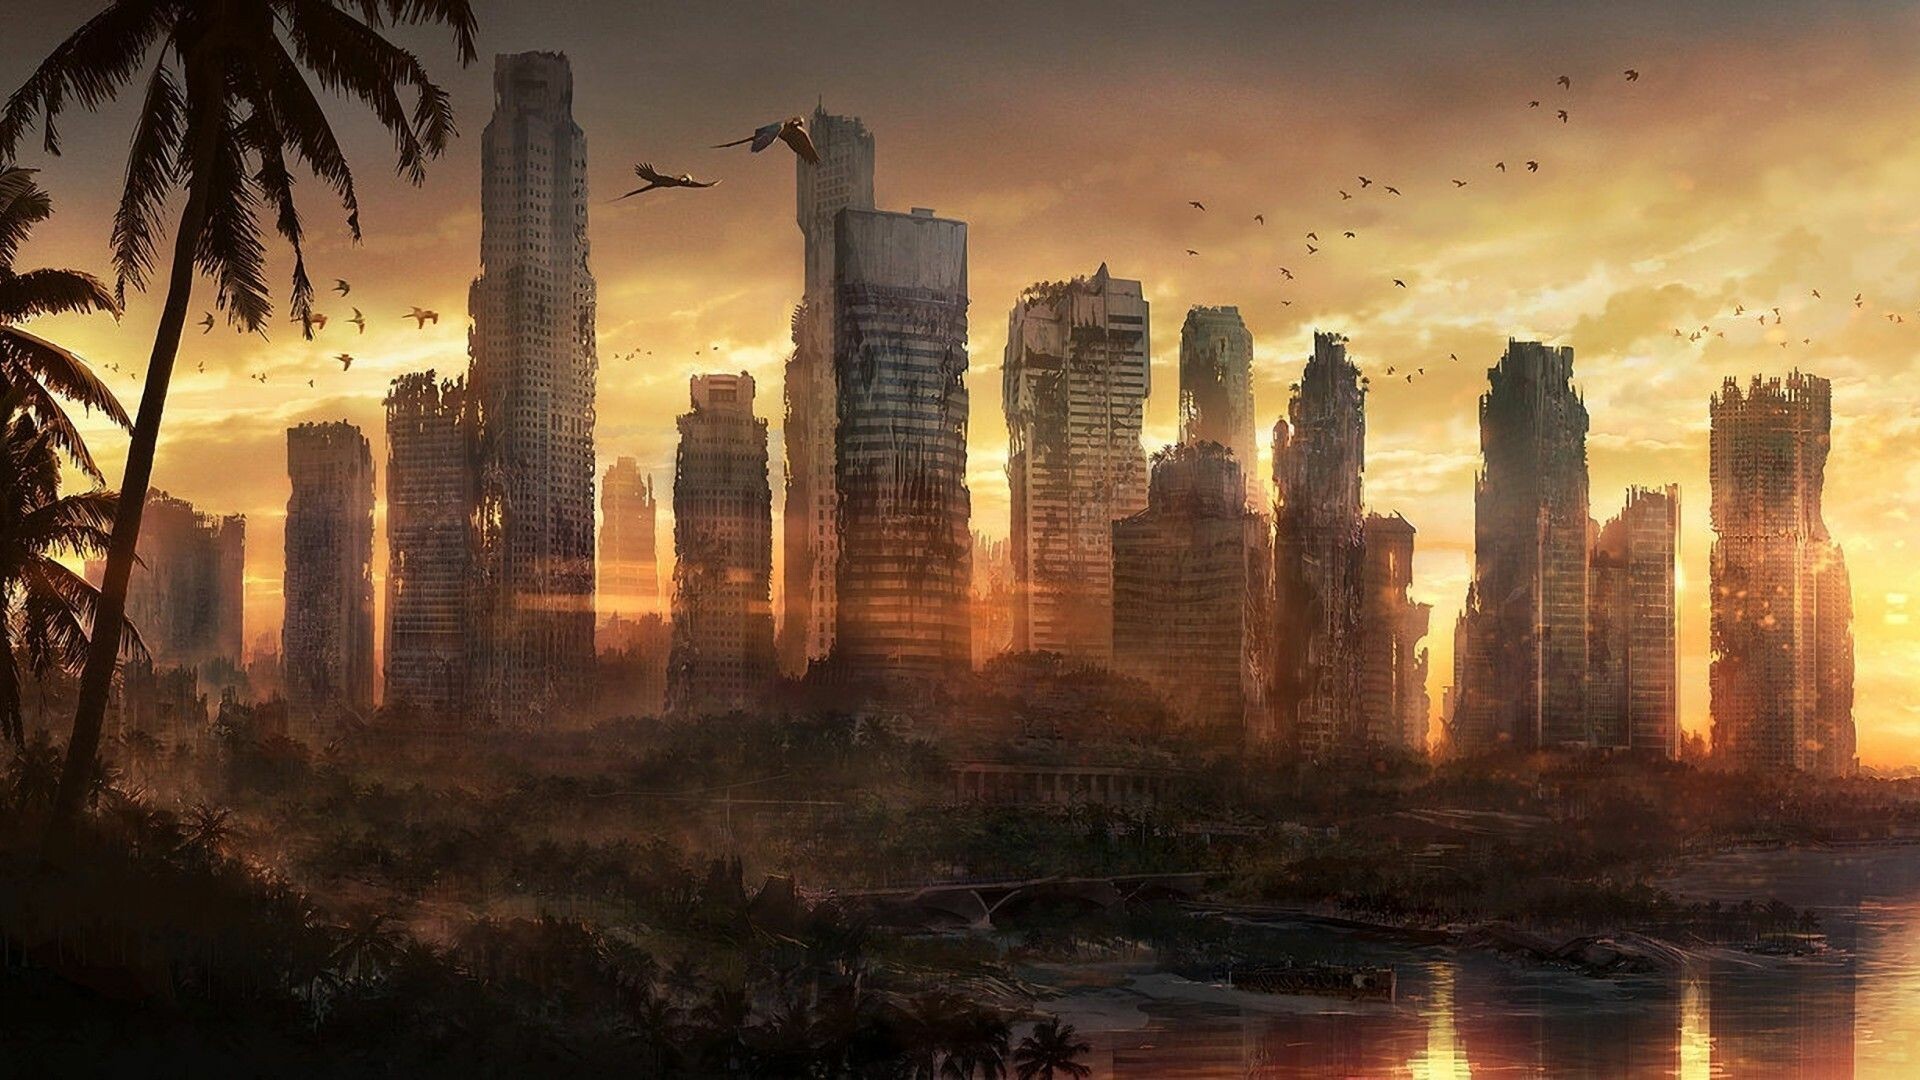 Post-apocalypse: Apocalypse, Science fiction, Dystopia. 1920x1080 Full HD Wallpaper.